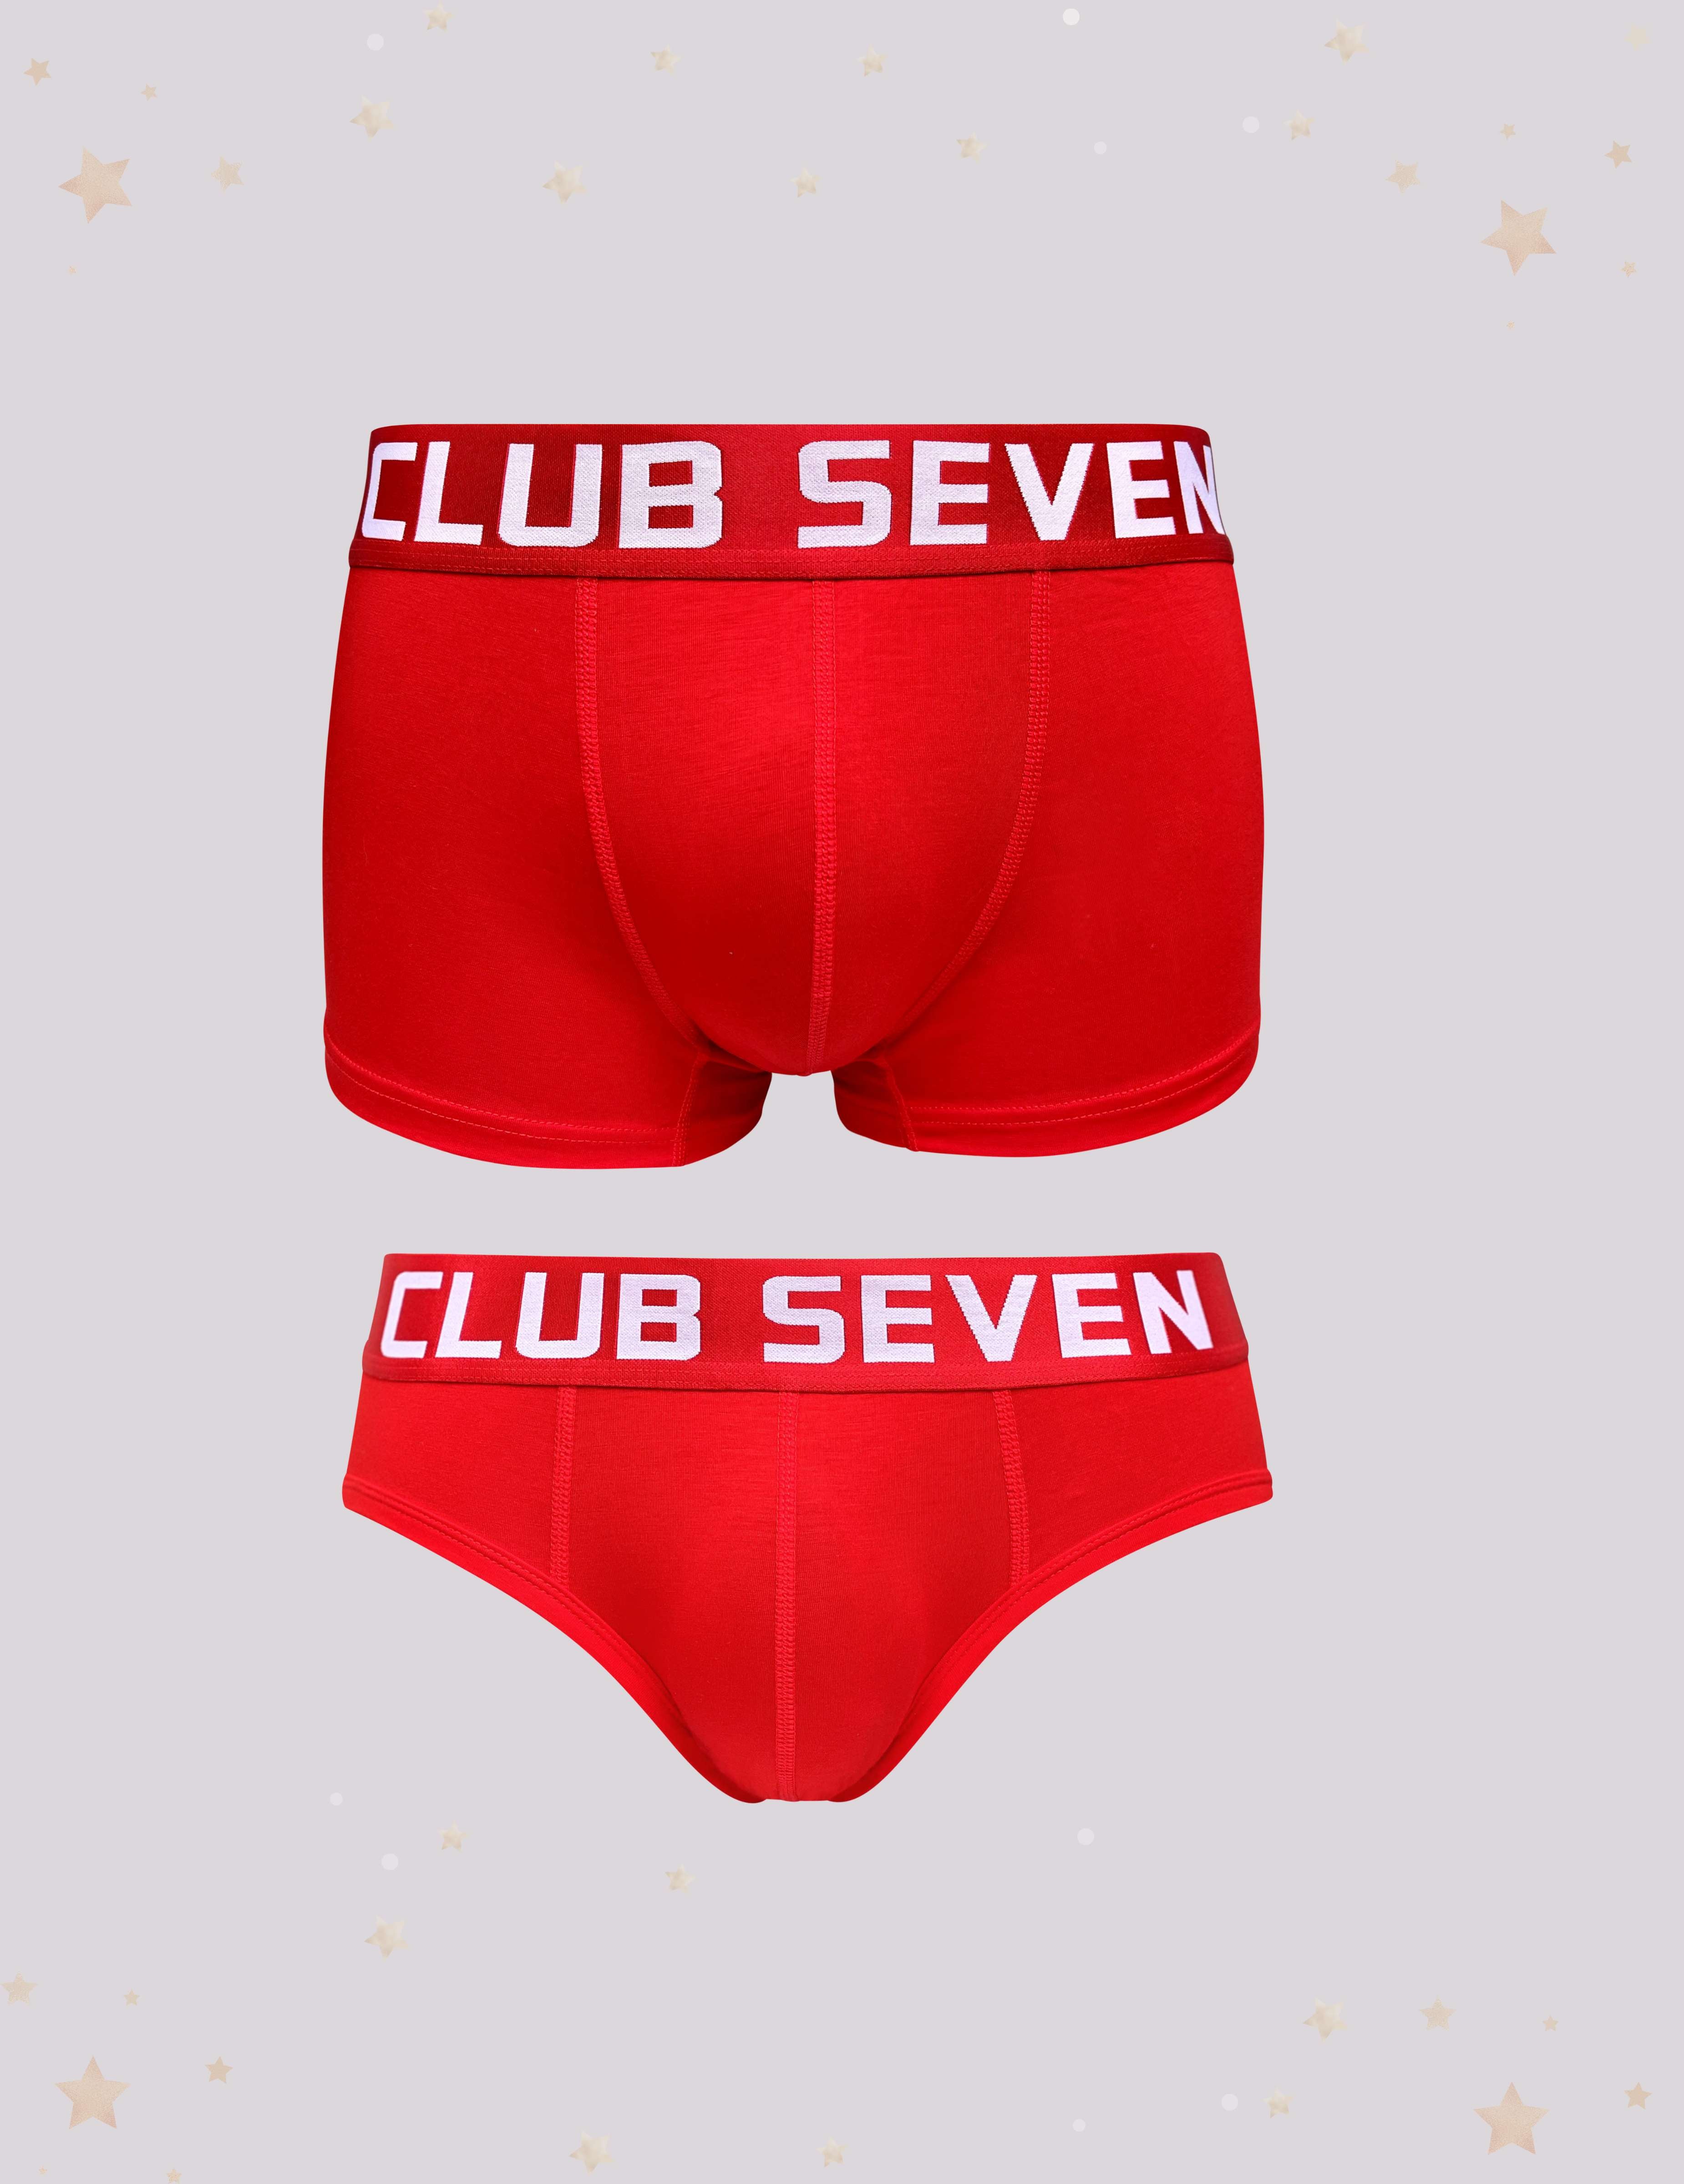 Men's Underwear Store. The Best Men's Underwear Stores, by Club Seven  Menswear